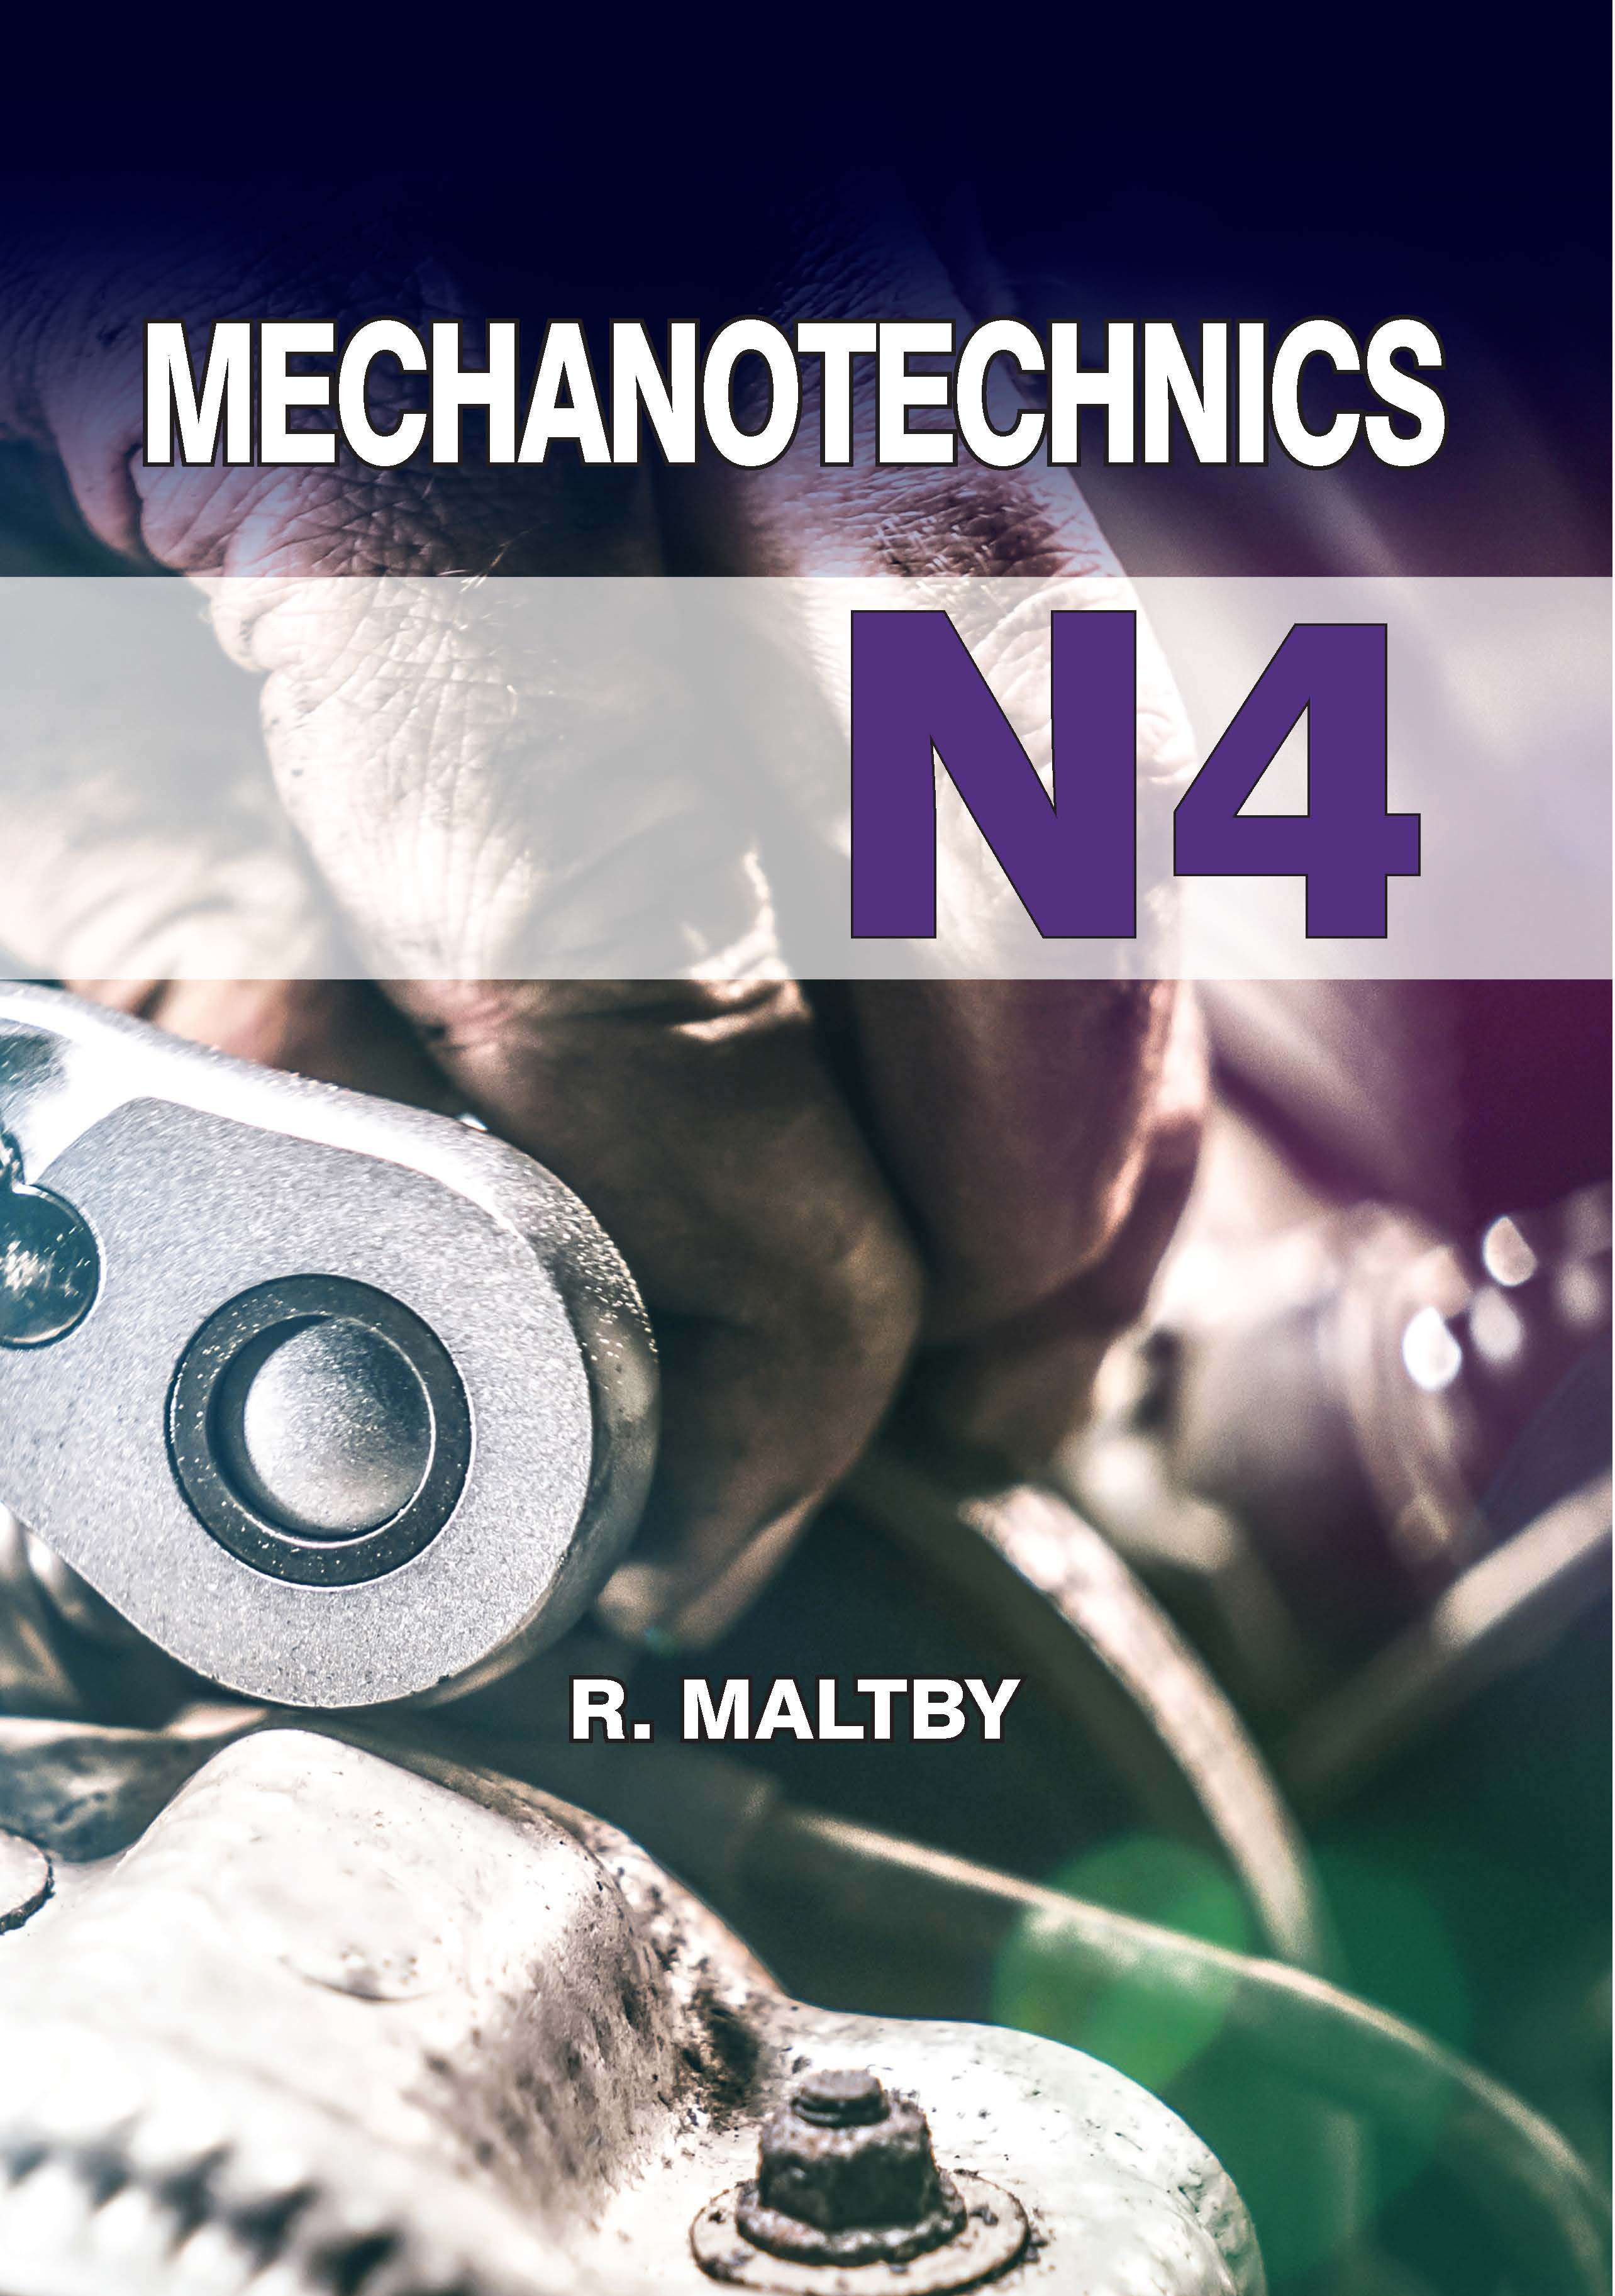 Mechanotechnics N4 Student Textbook